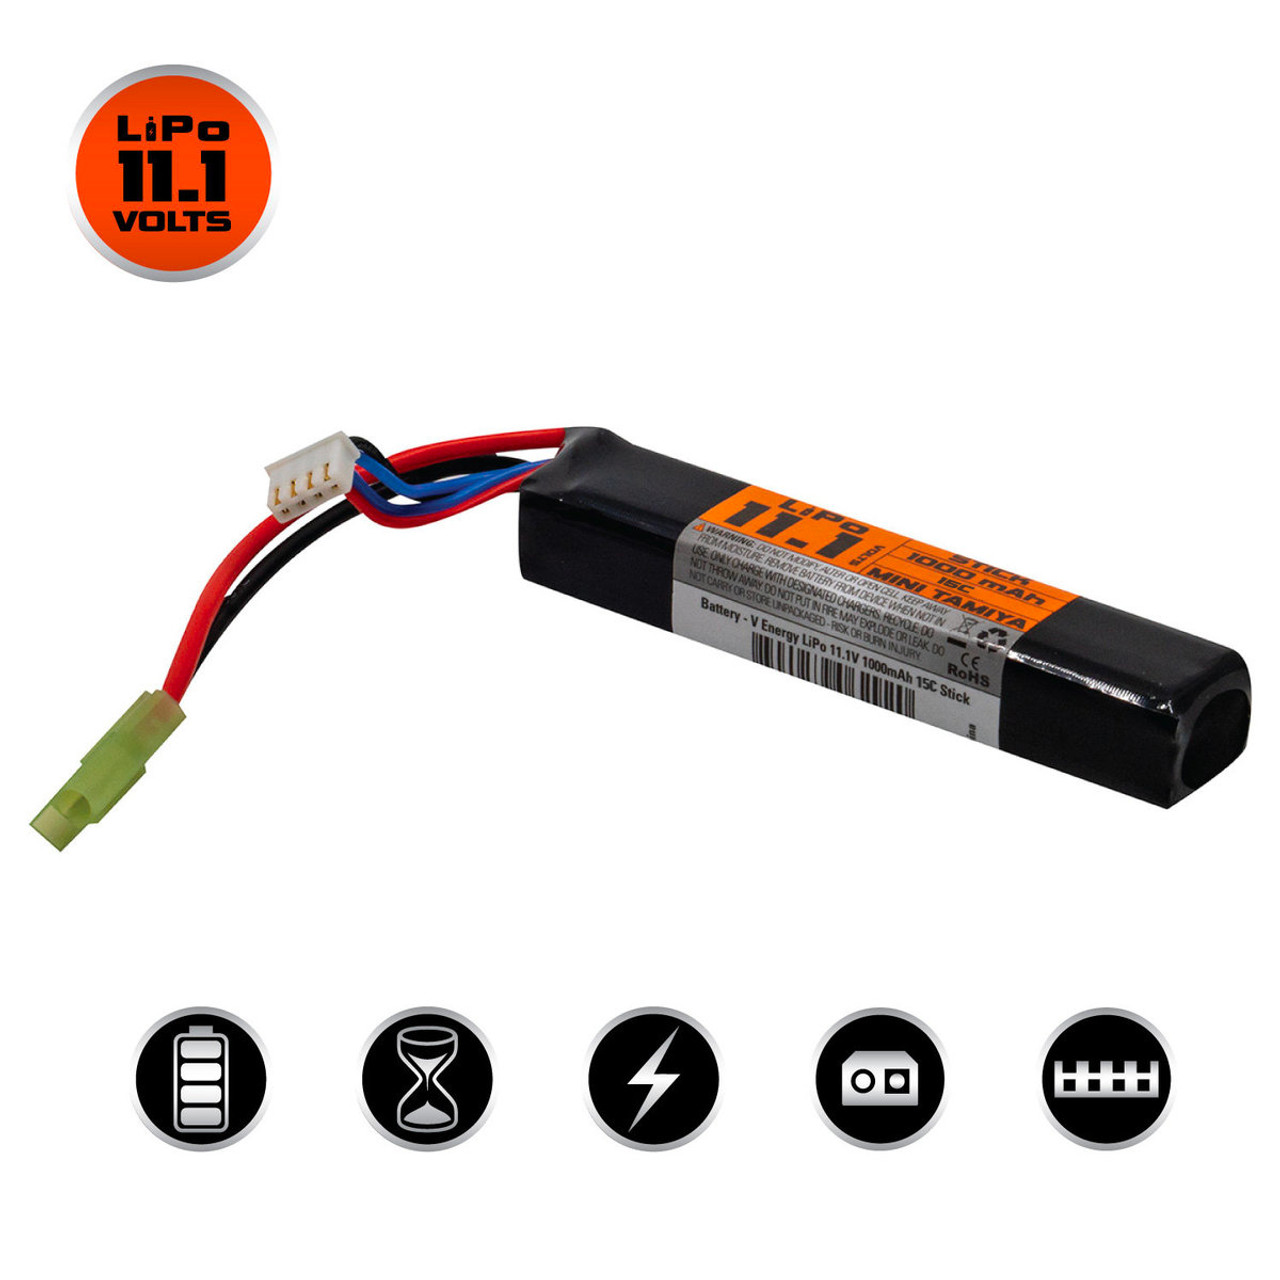 Valken LiPo 11.1v 1000mAh 15C/30C Stick Airsoft Battery (Small